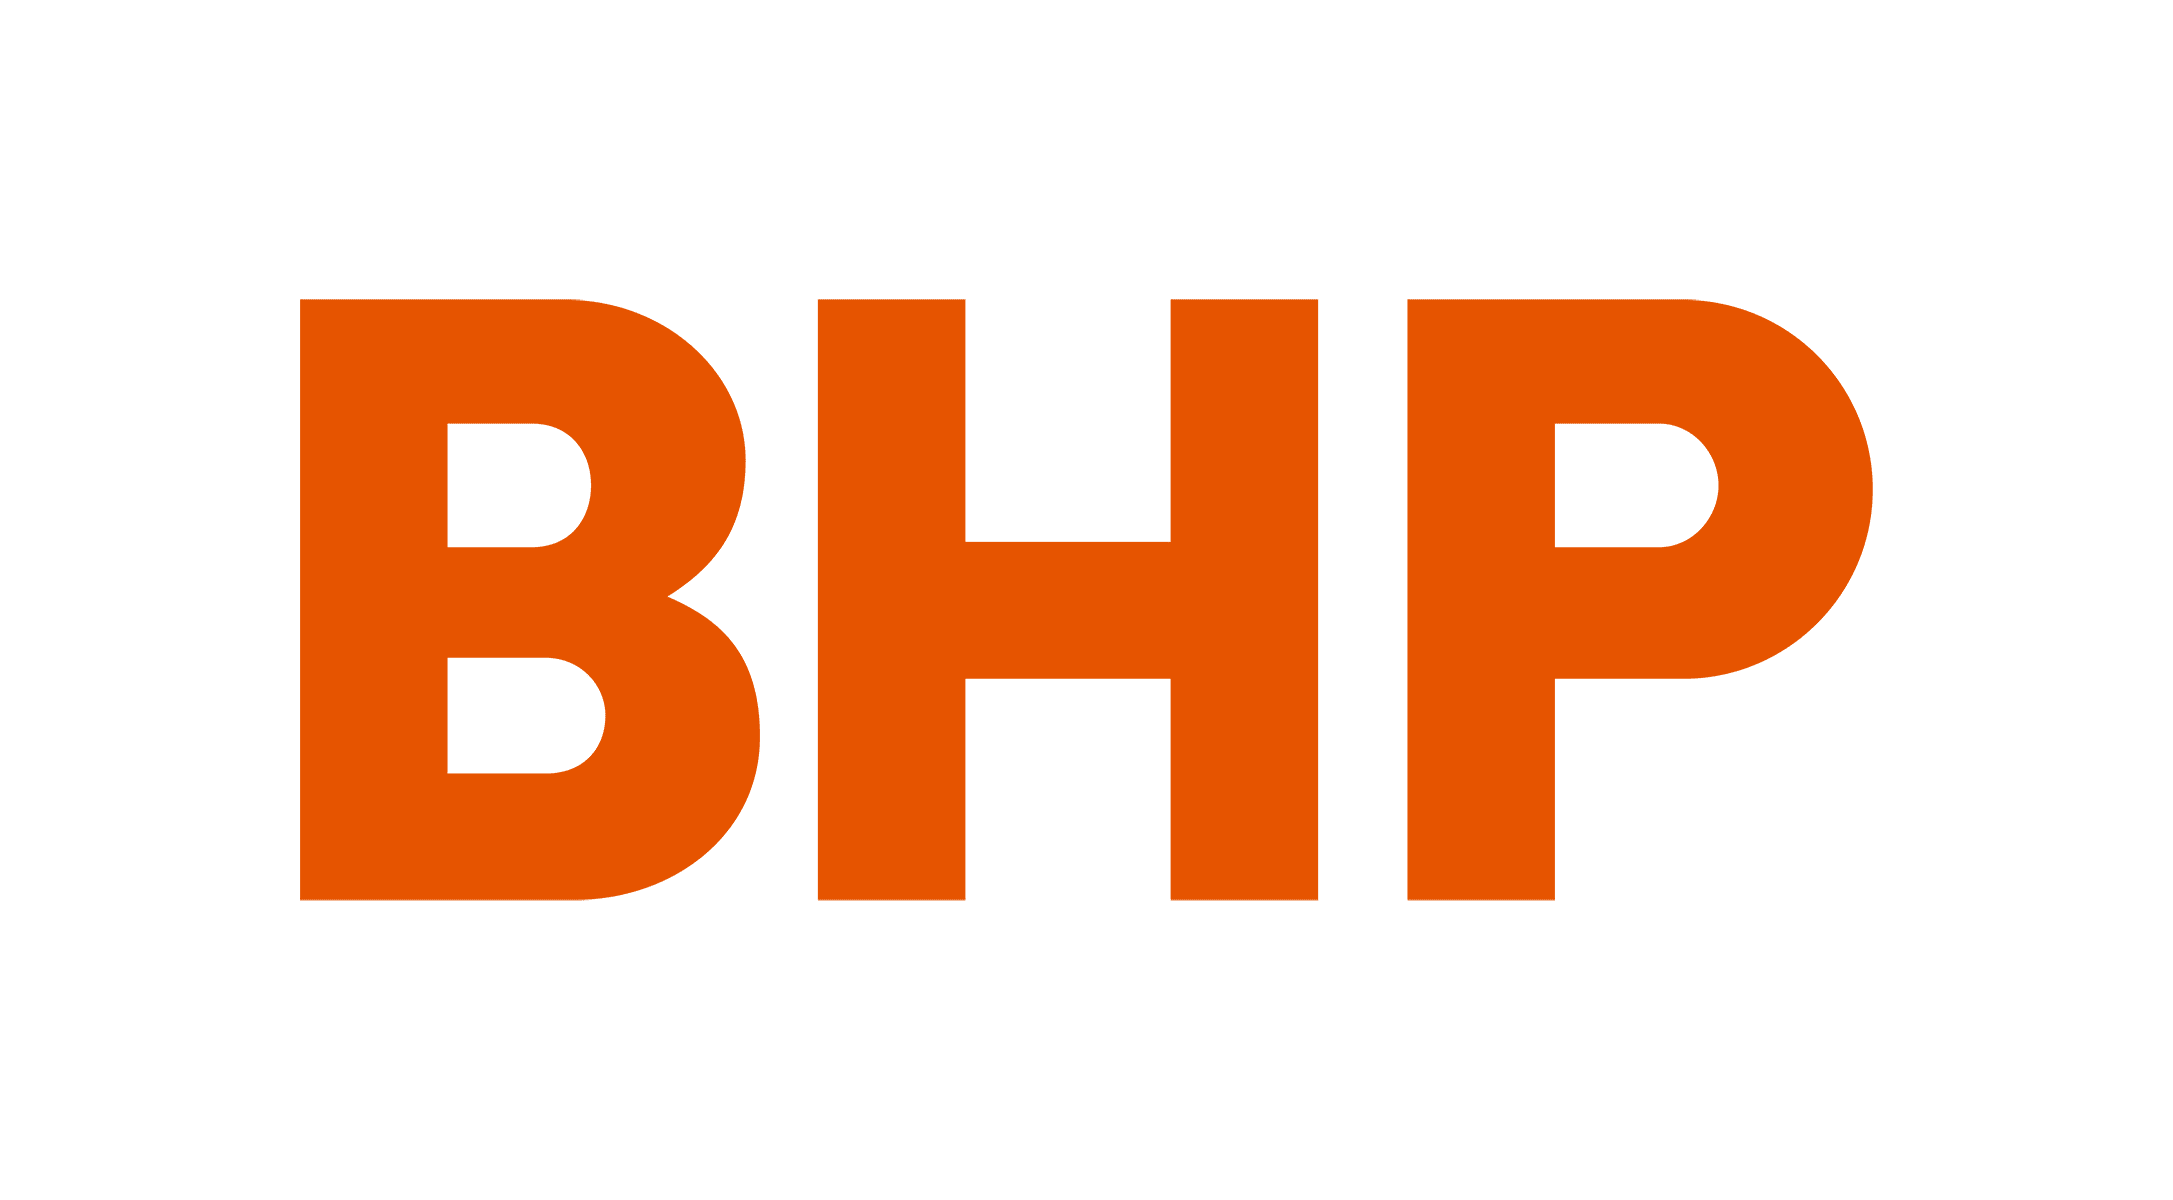 bhp logo